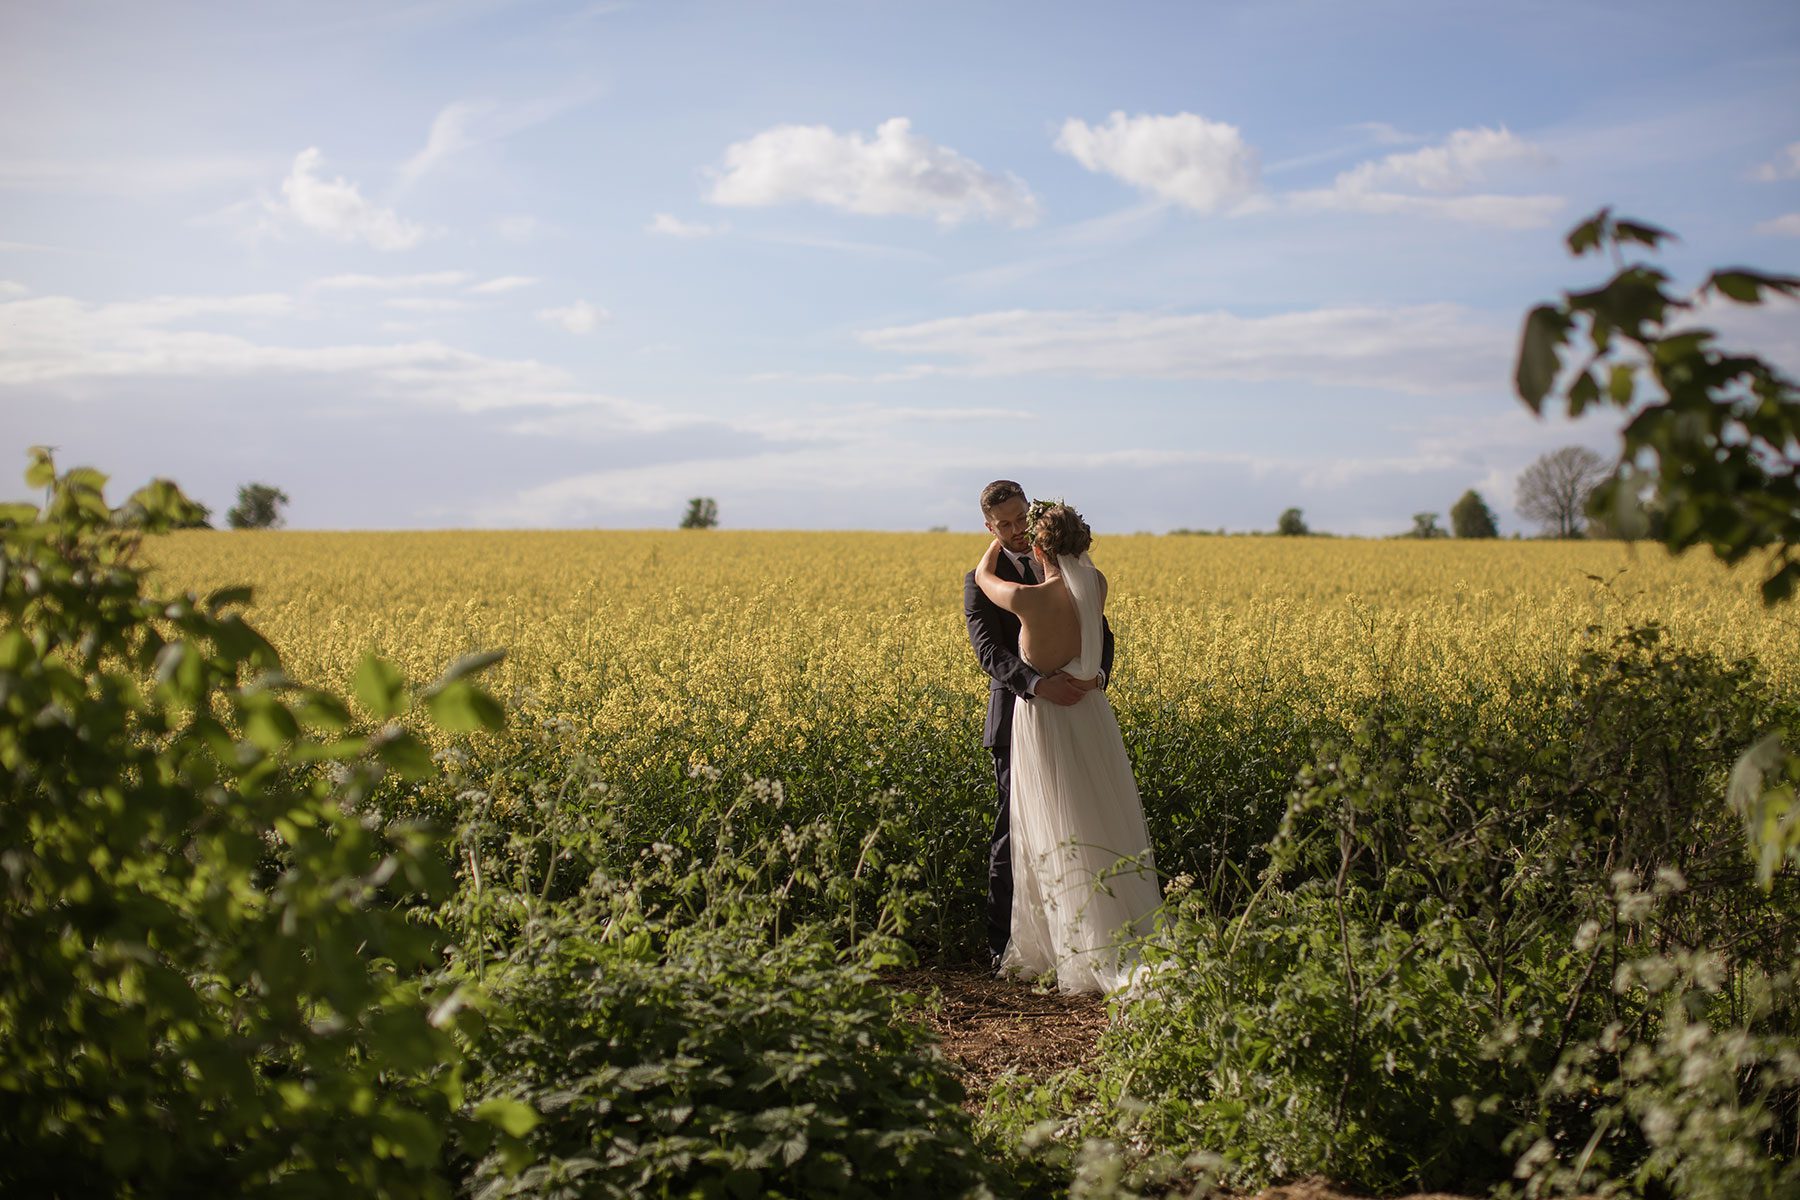 Cripps Barn - Reportage Wedding Photography in Cheltenham | Bullit Photography